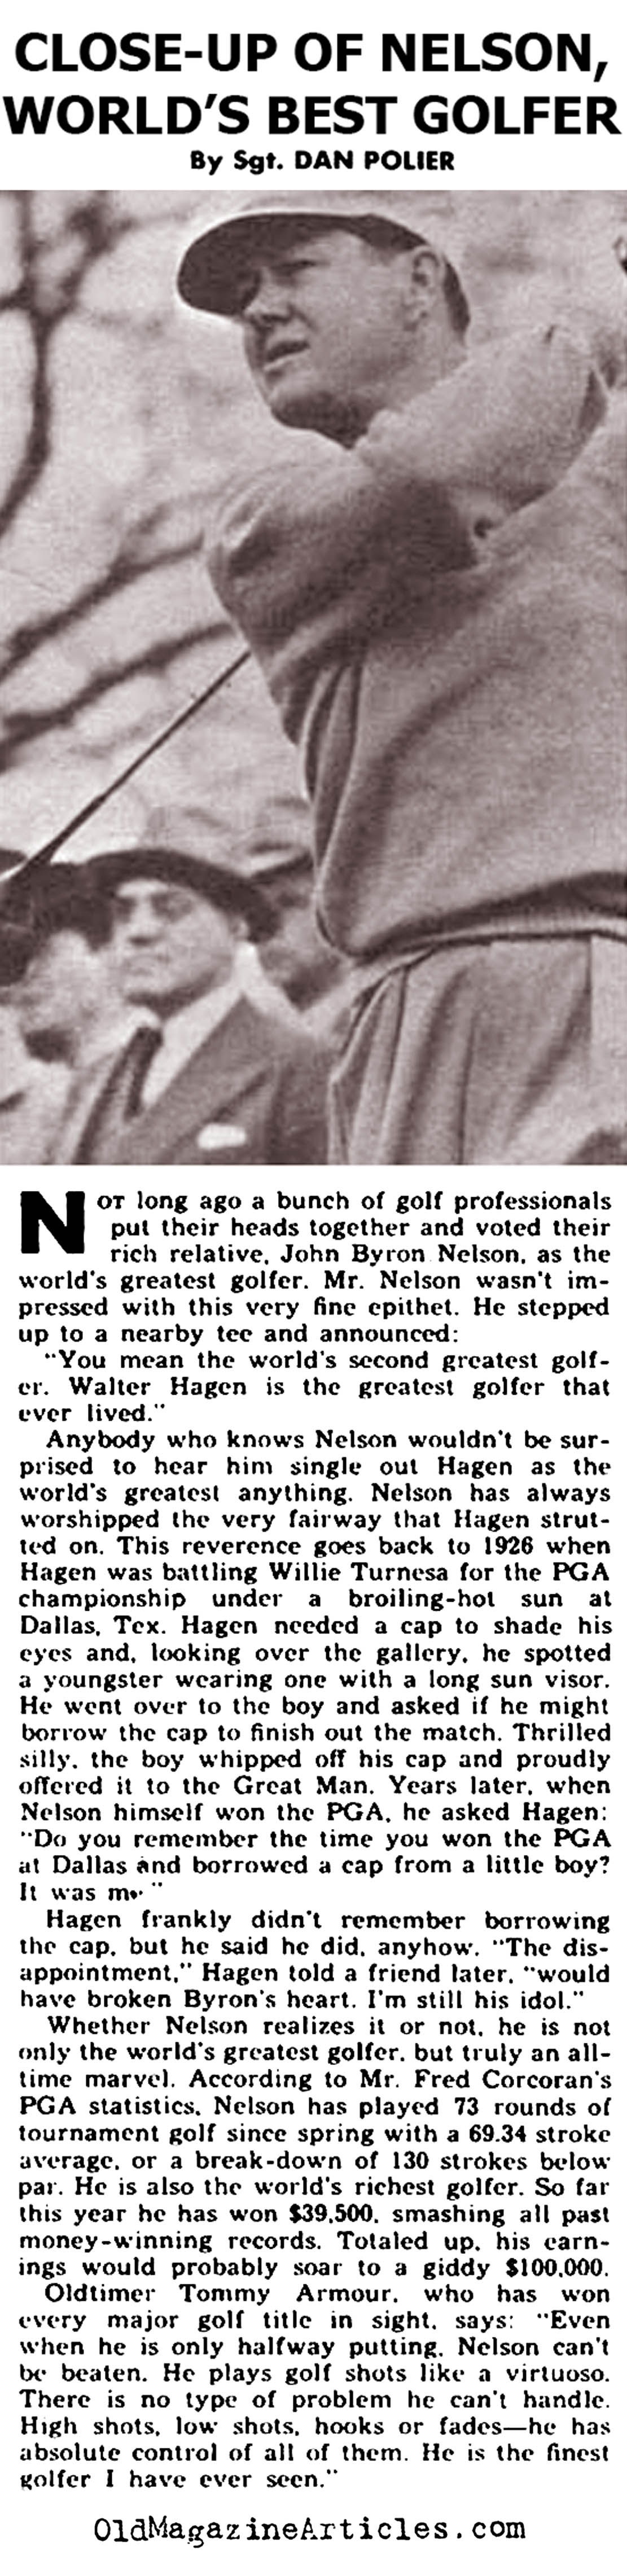 John Byron Nelson: One Heck Of A Golfer (Yank Magazine, 1944)